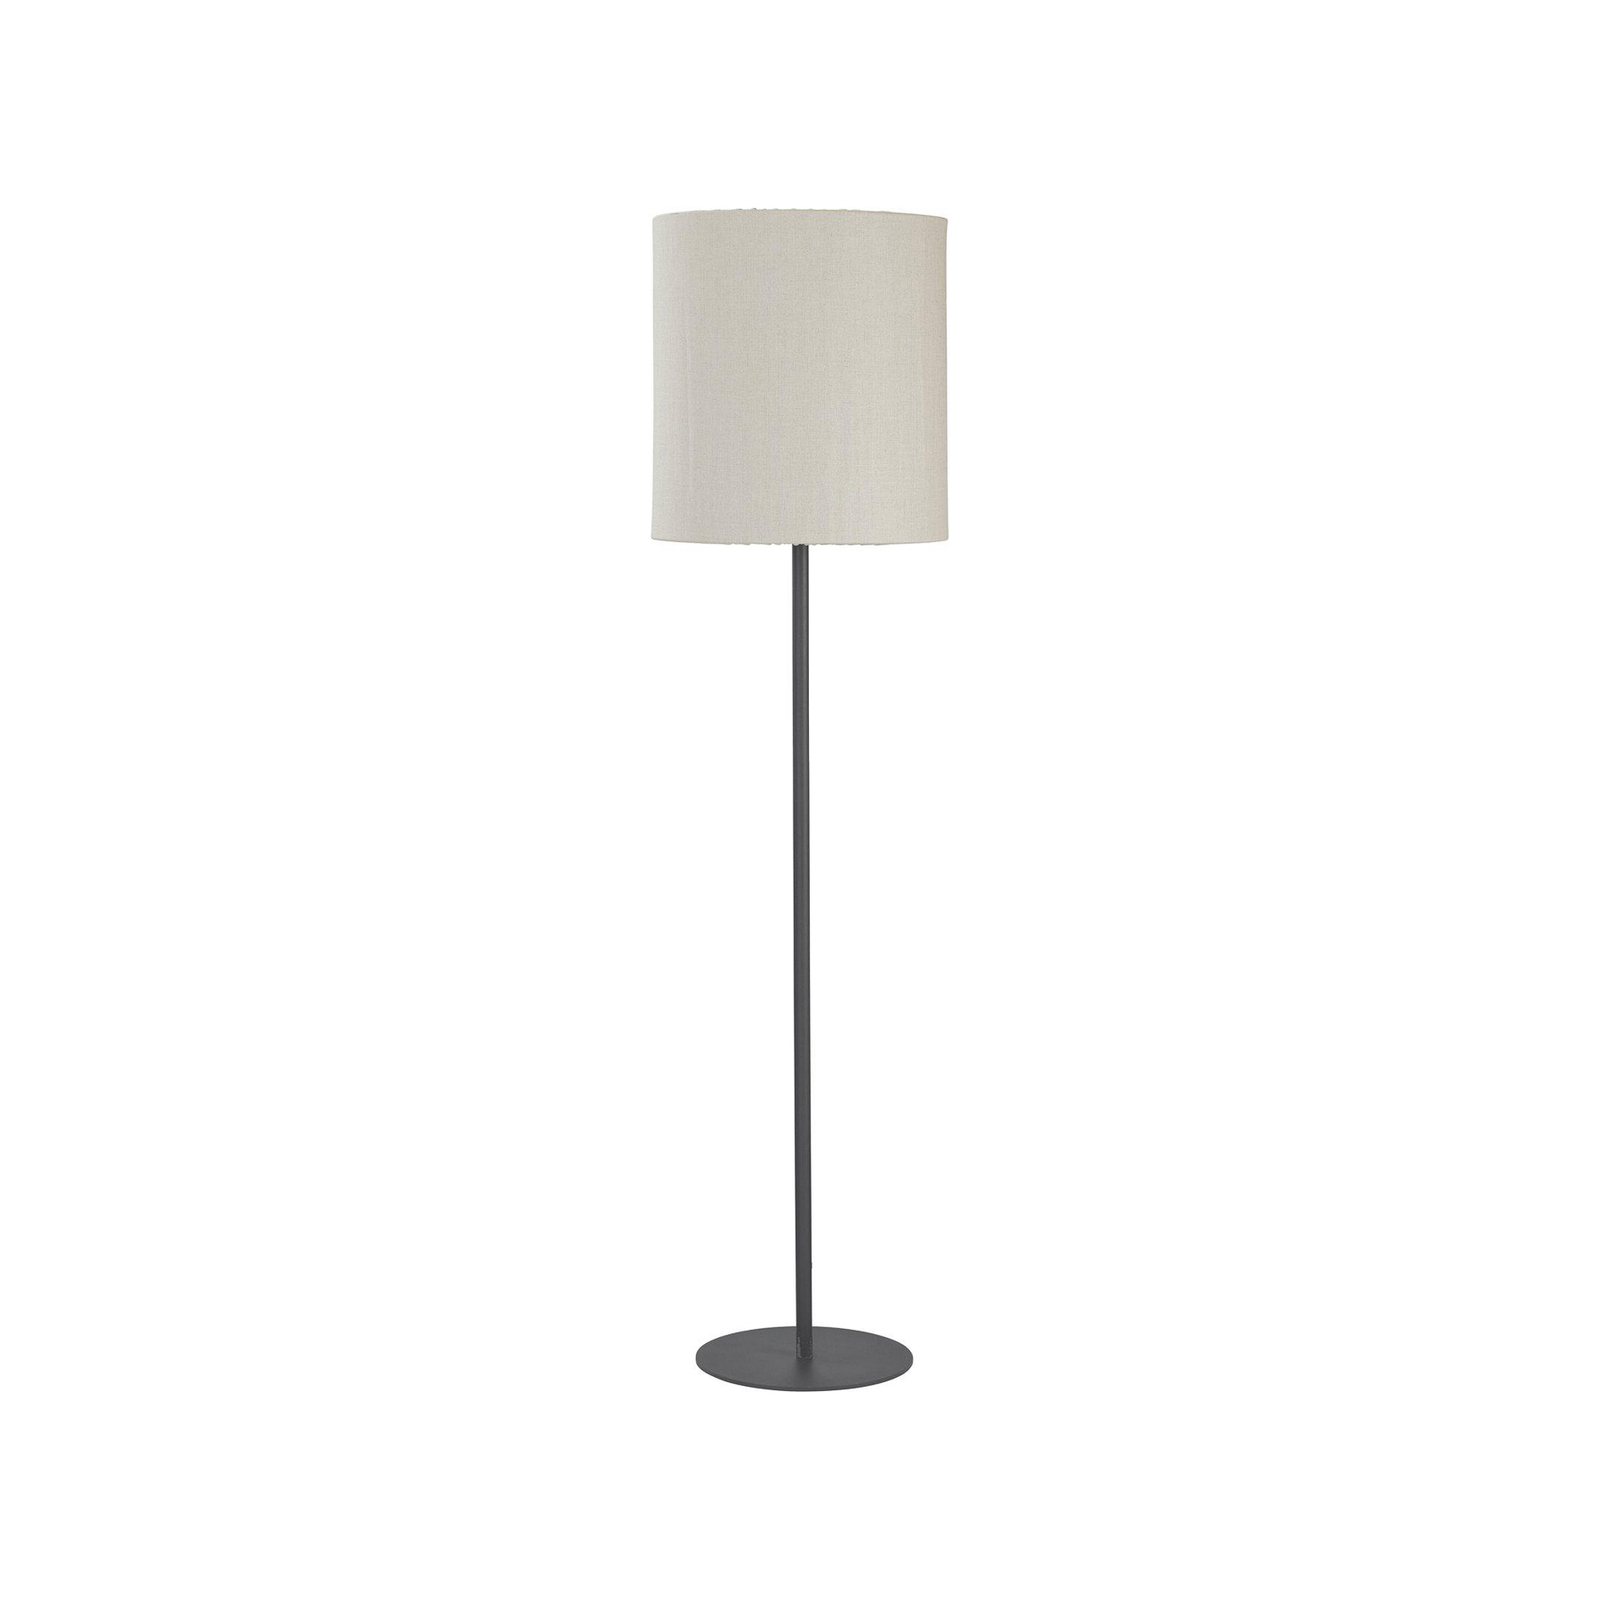 PR Home Външна подова лампа Agnar, тъмно сиво/бежово, 156 cm